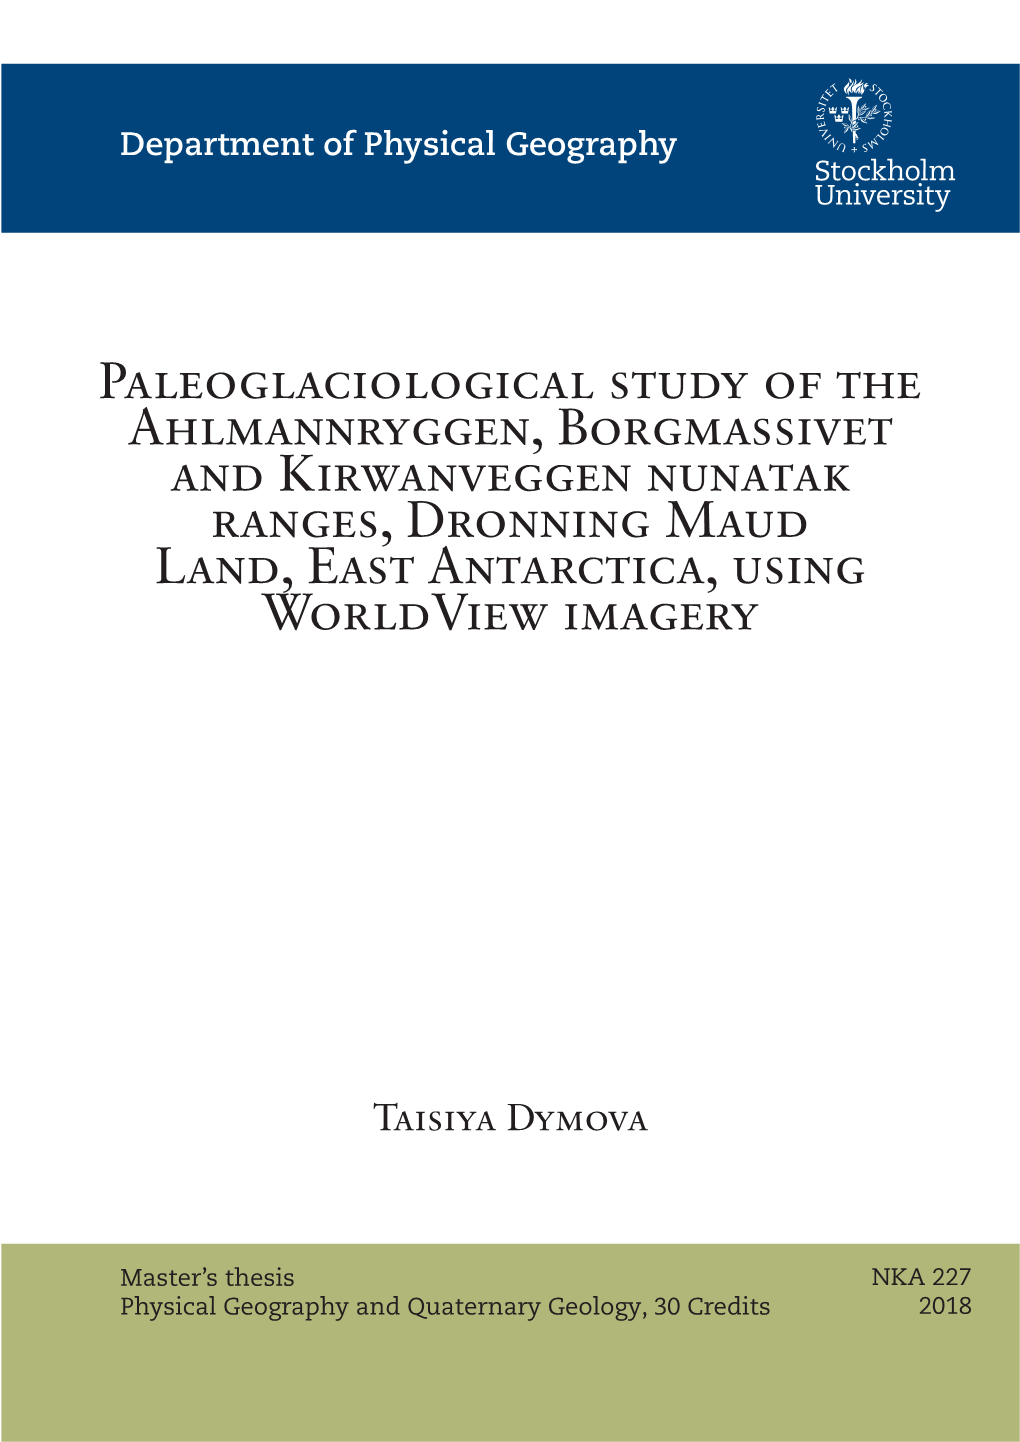 Paleoglaciological Study of the Ahlmannryggen, Borgmassivet and Kirwanveggen Nunatak Ranges, Dronning Maud Land, East Antarctica, Using Worldview Imagery